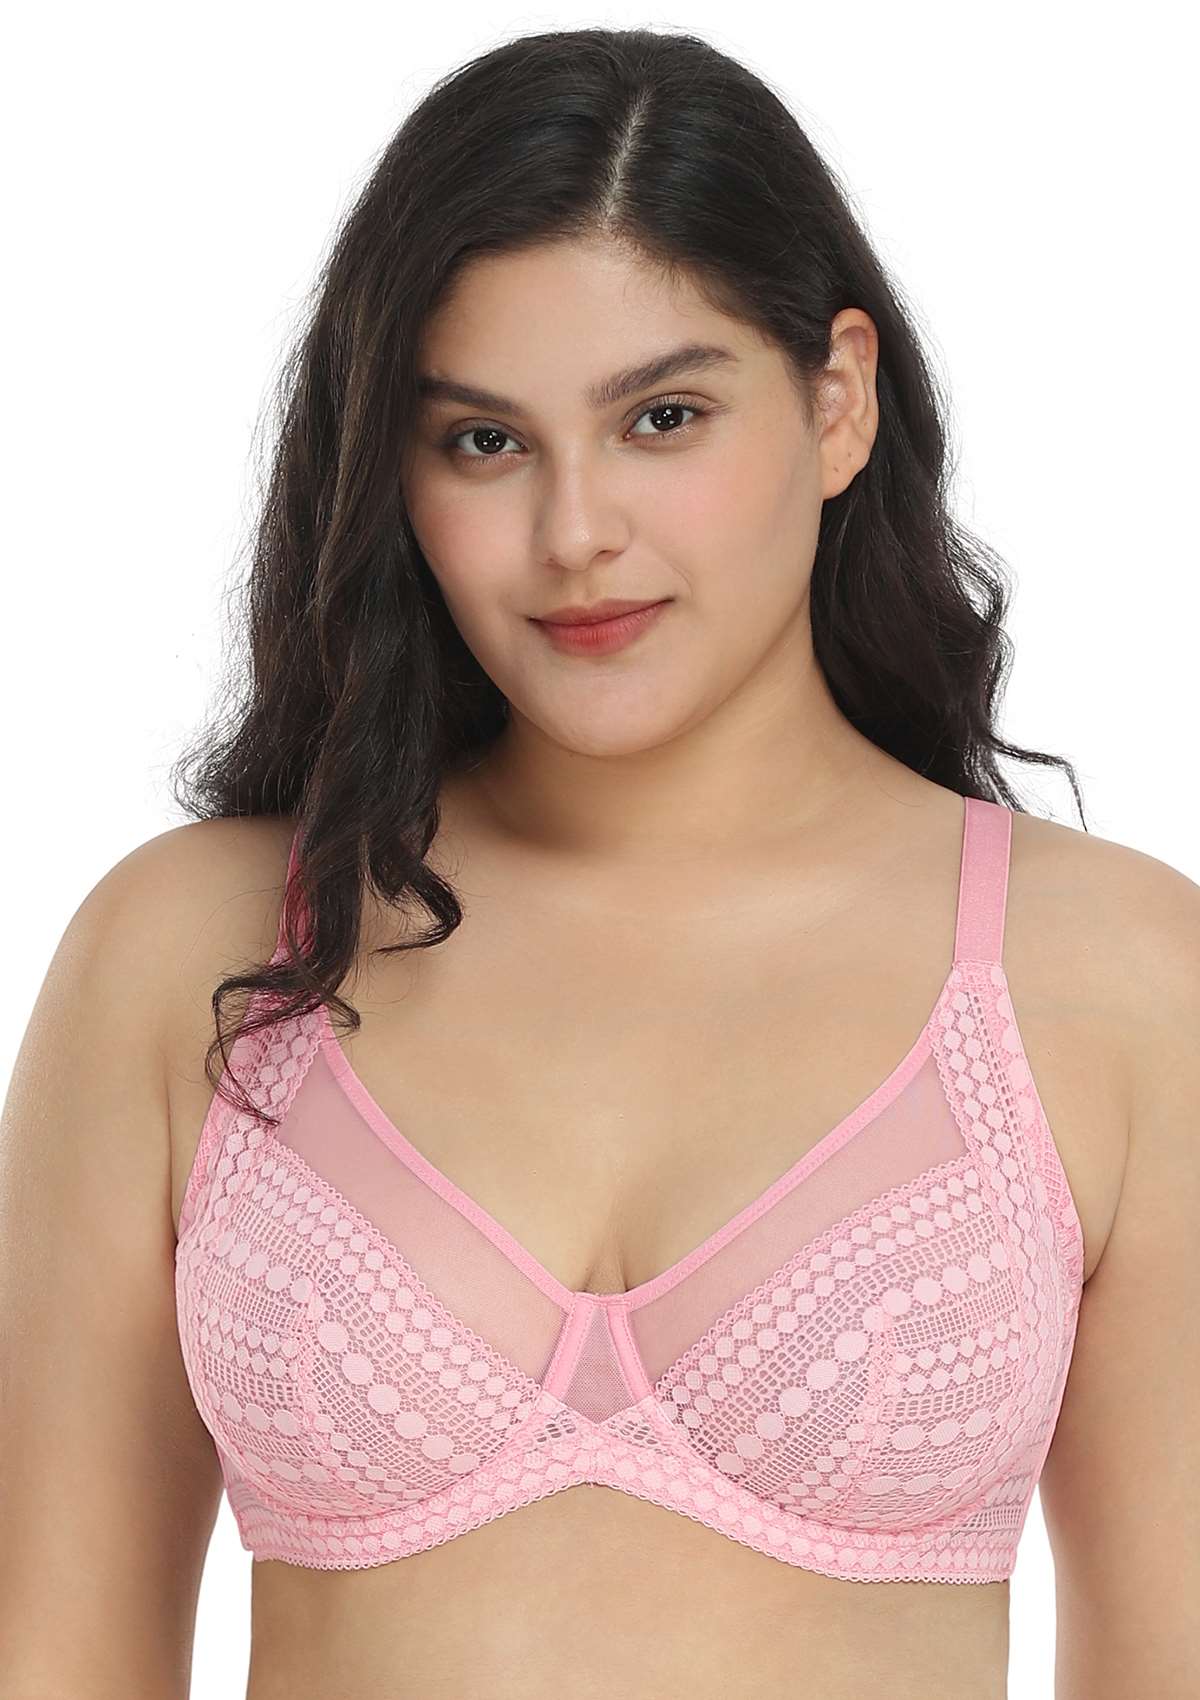 HSIA Heroine Lace Unlined Bra: Bra That Hides Back Fat - Plus Size - Pink / 34 / C